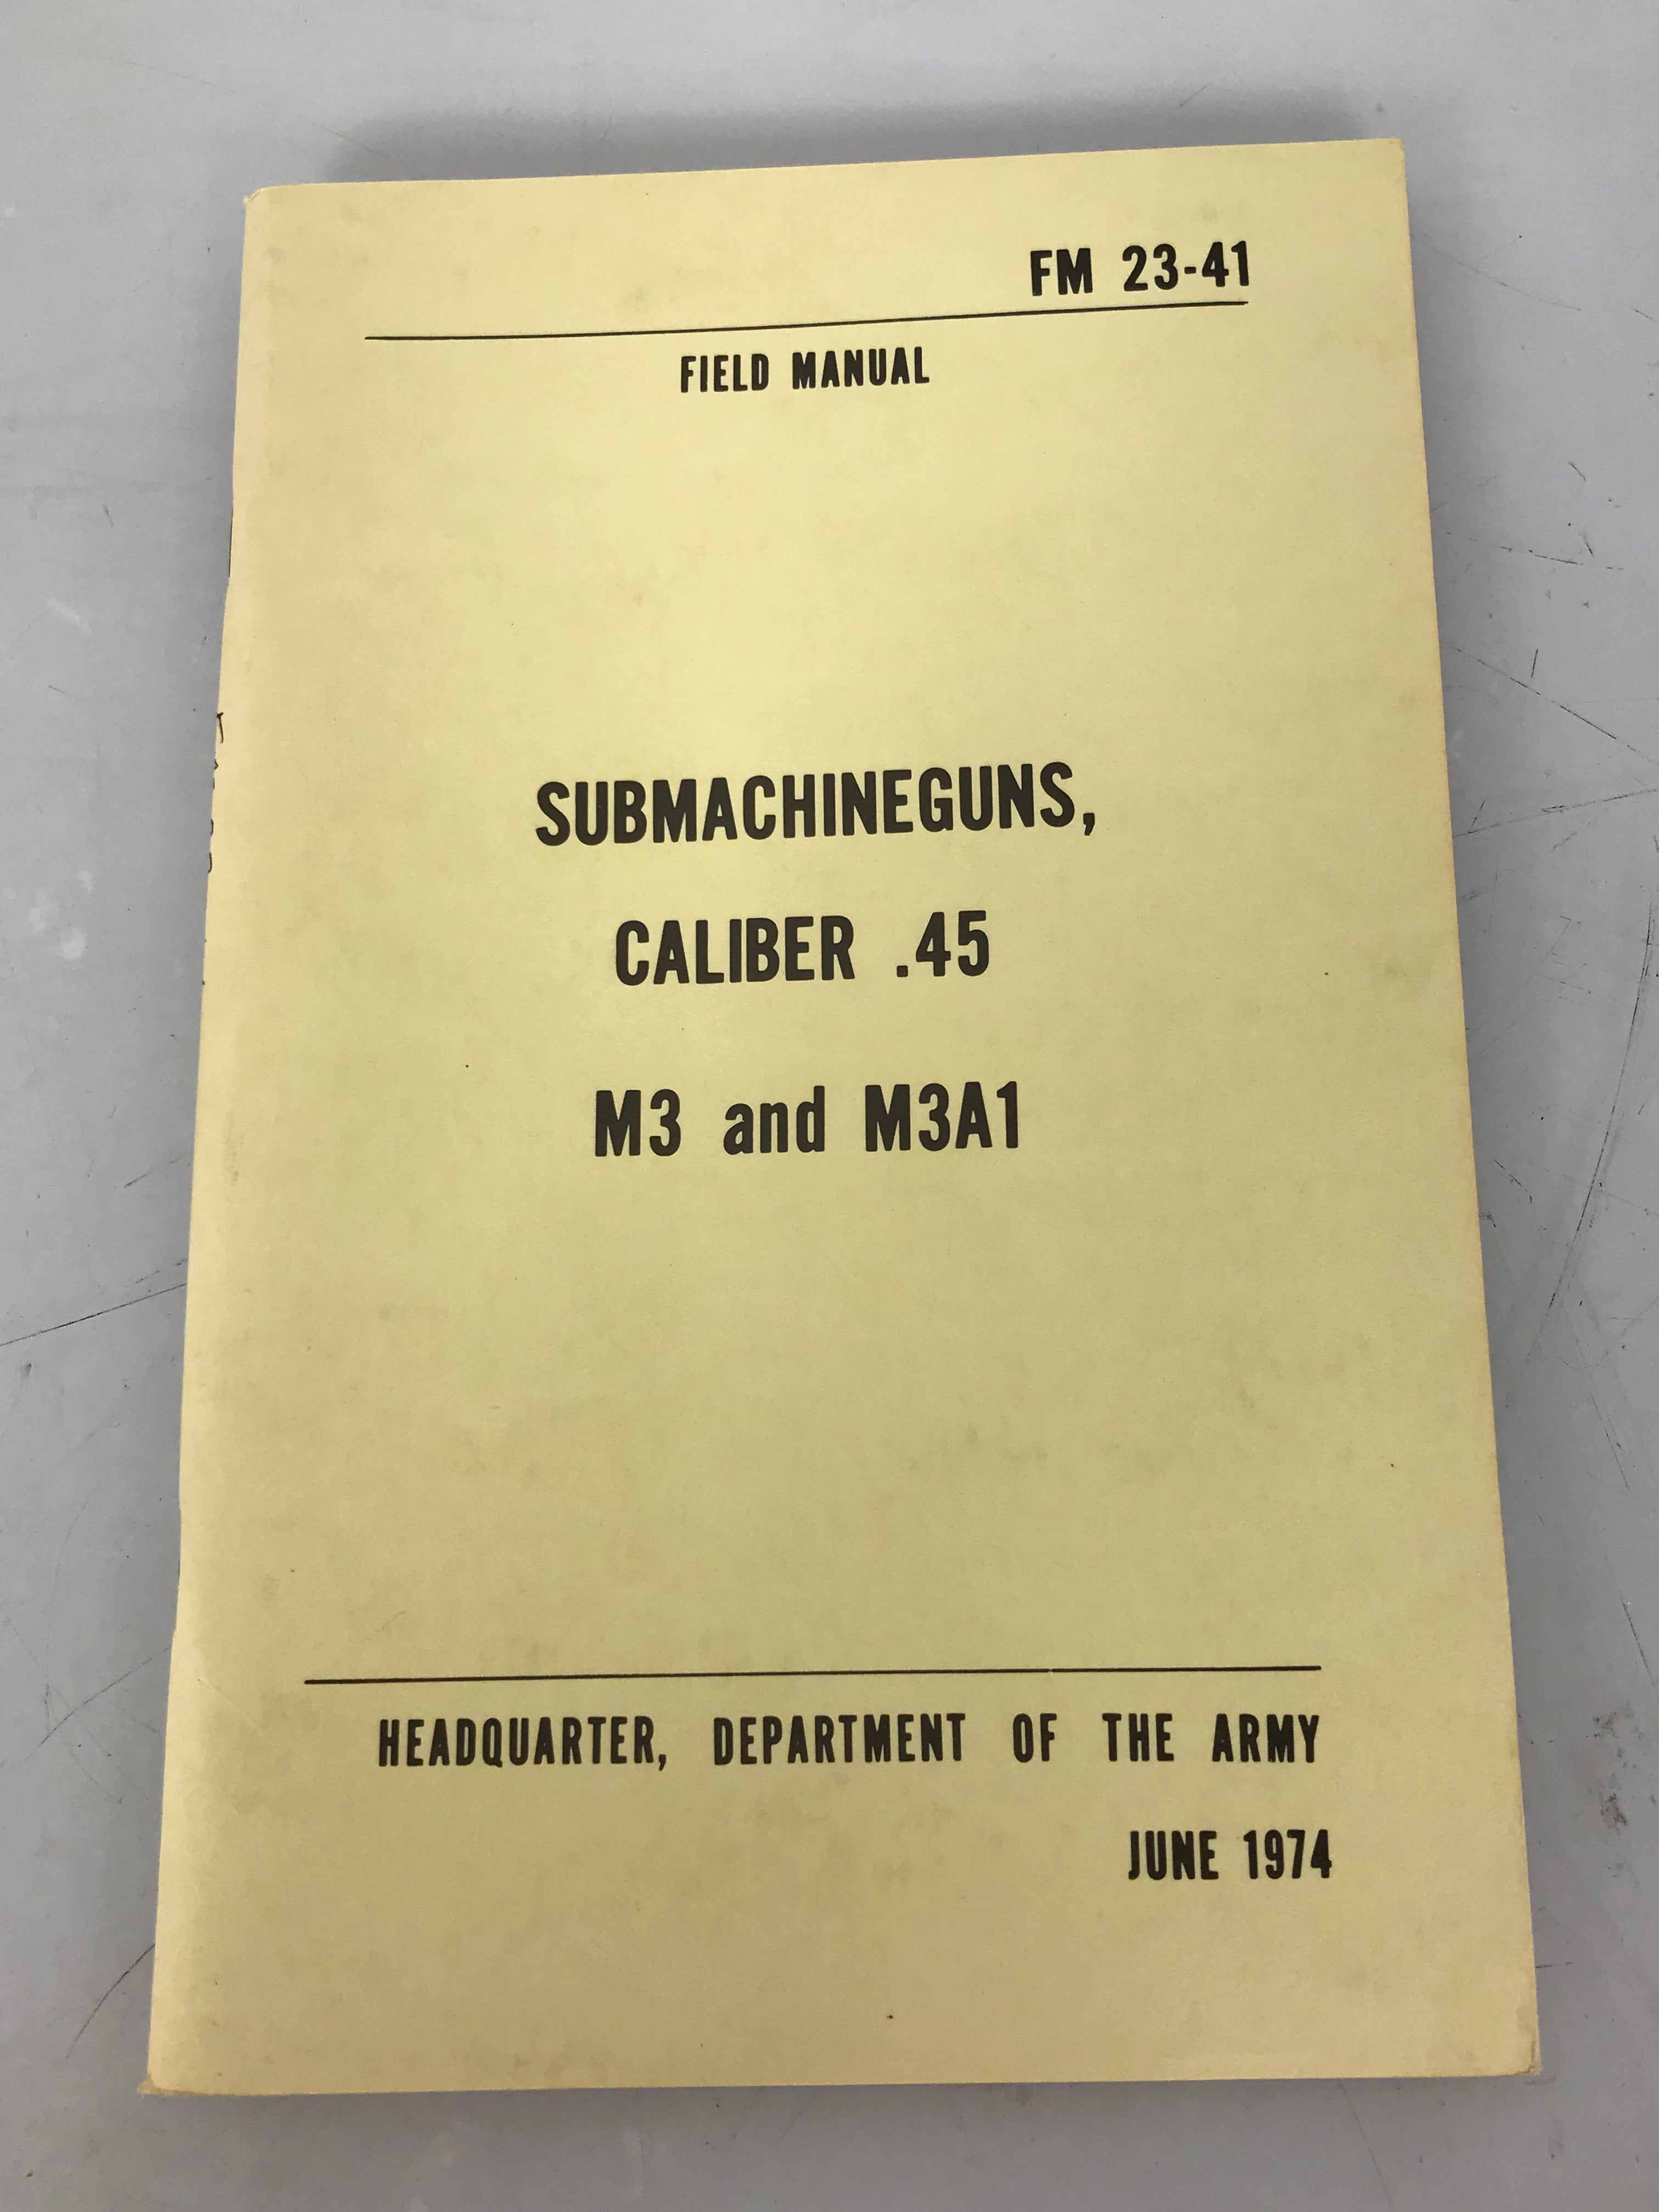 1974 US Army Field Manual Submachineguns, Caliber .45 M3 and M3A1 FM 23-41